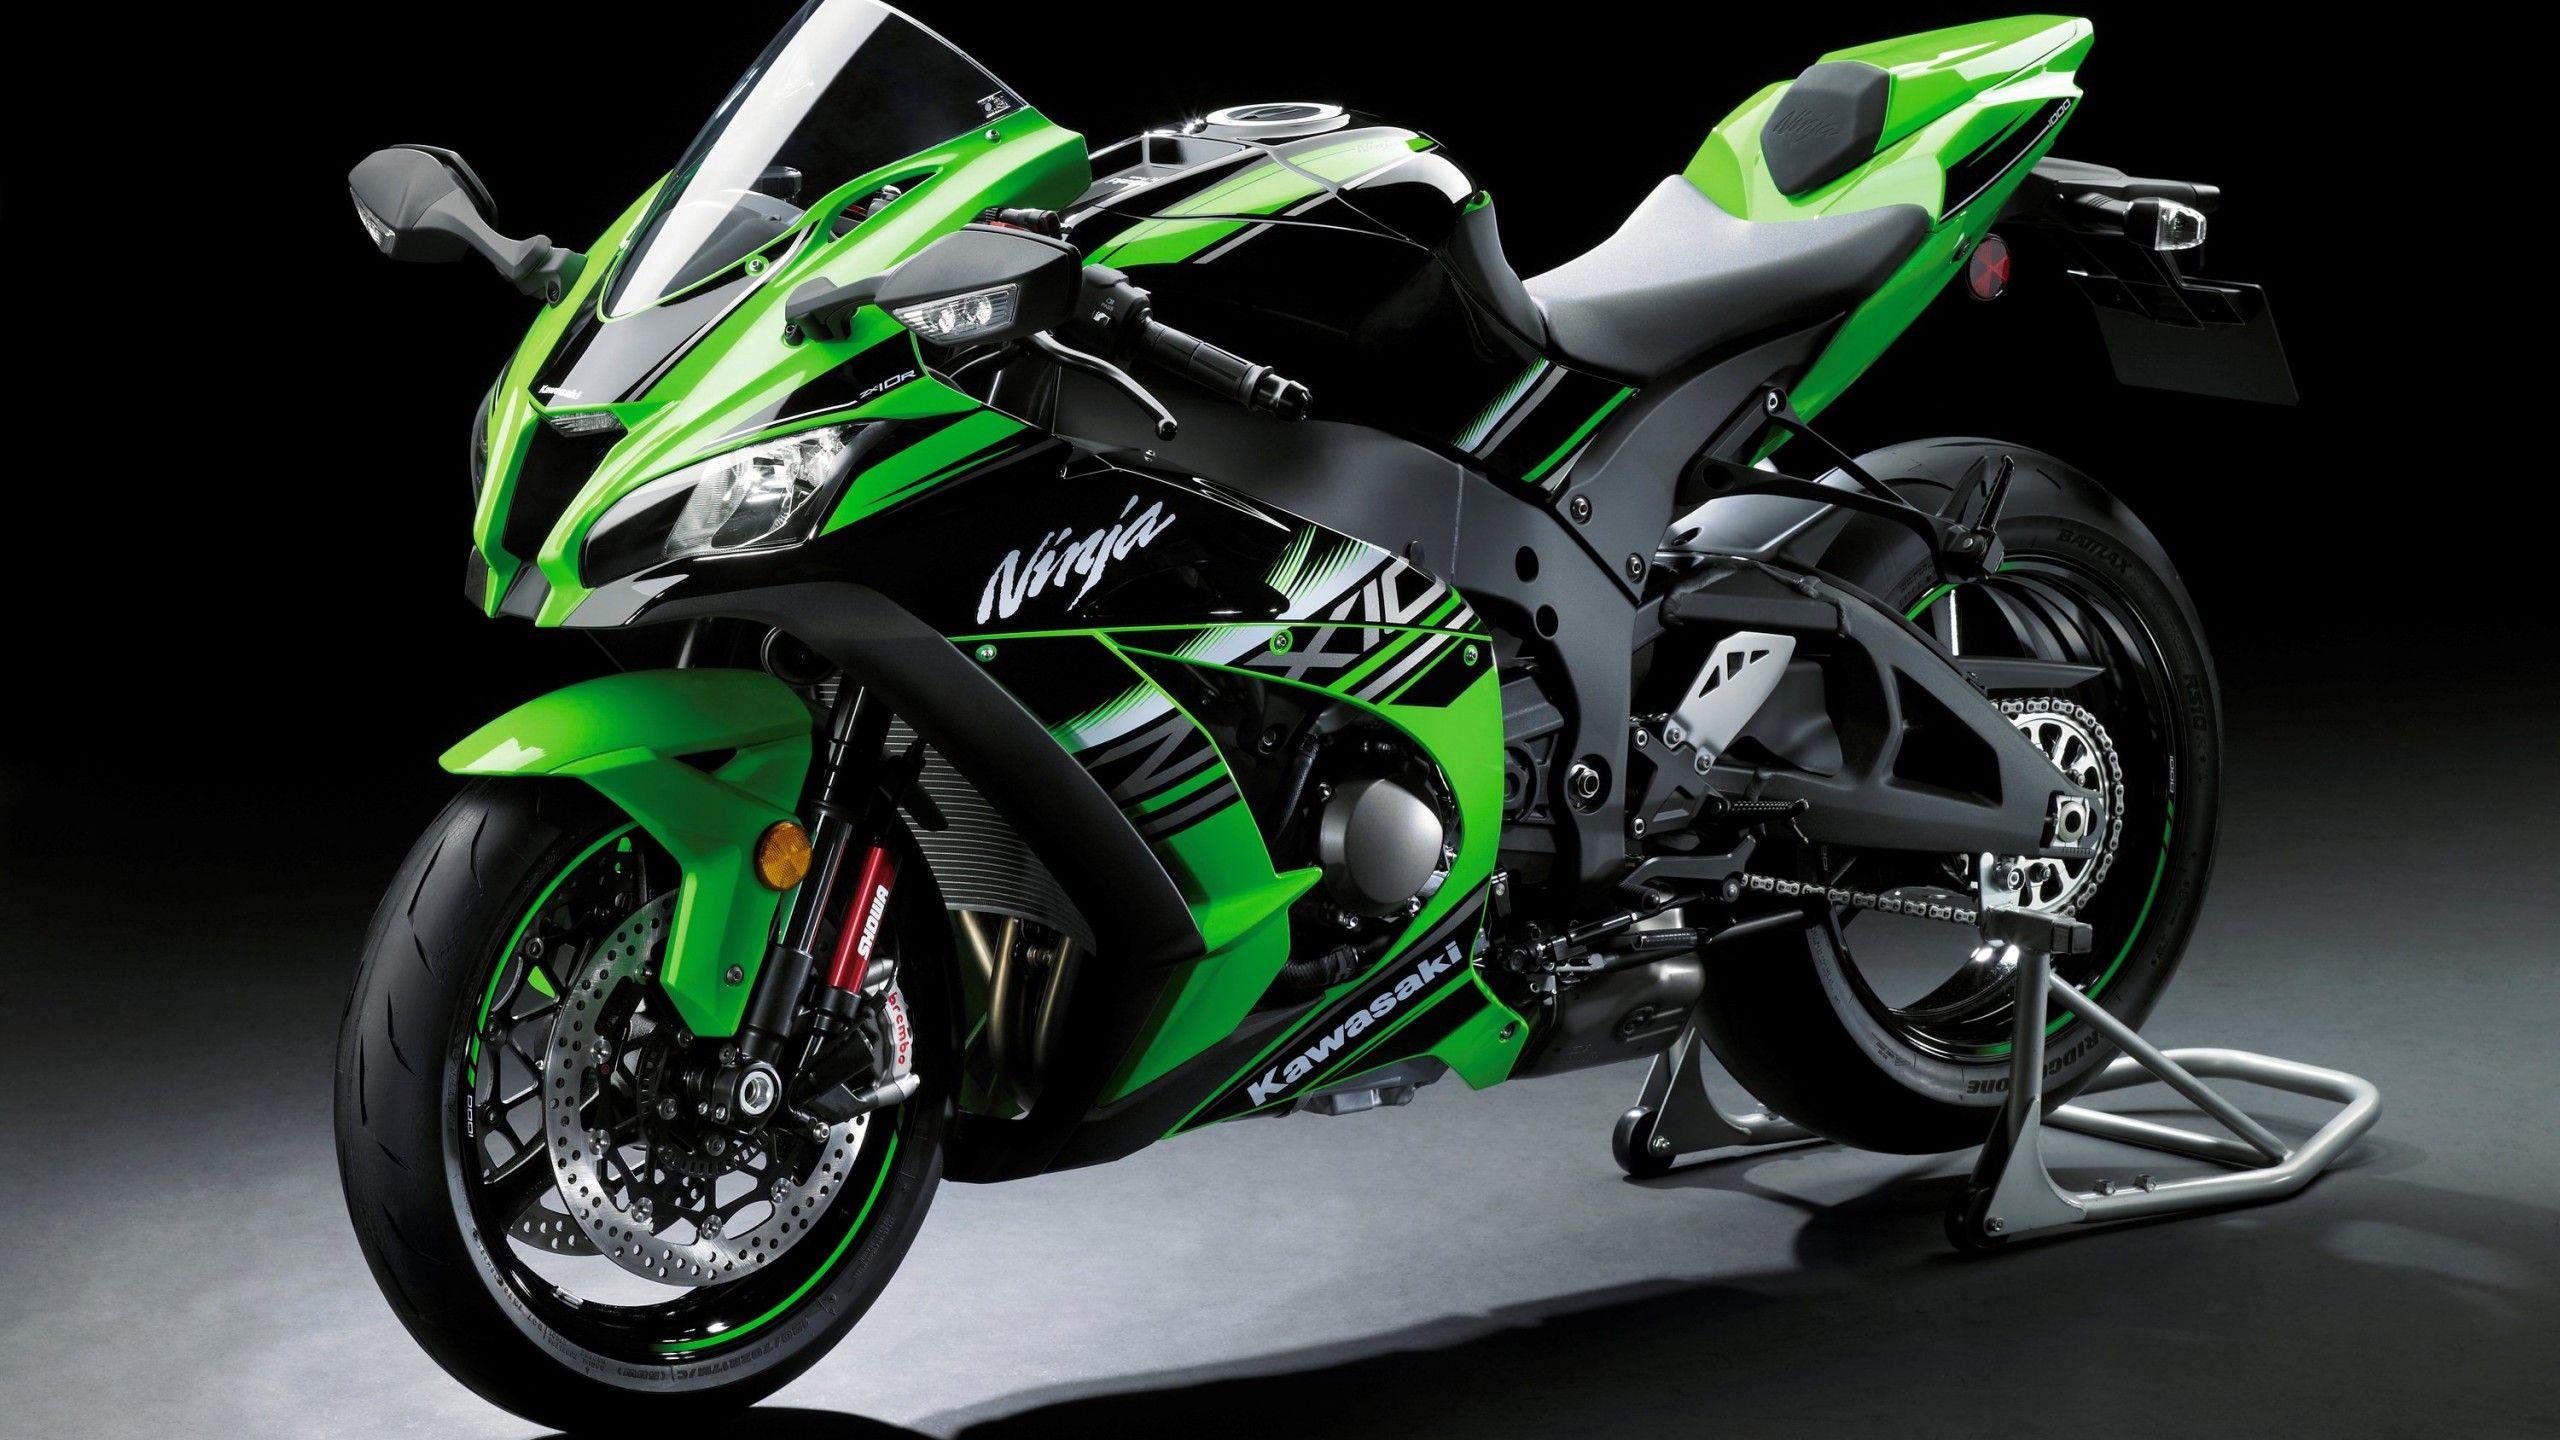 Wallpaper Kawasaki ninja h2r, sport bikes, best bikes, best motorcycle, Cars & Bikes